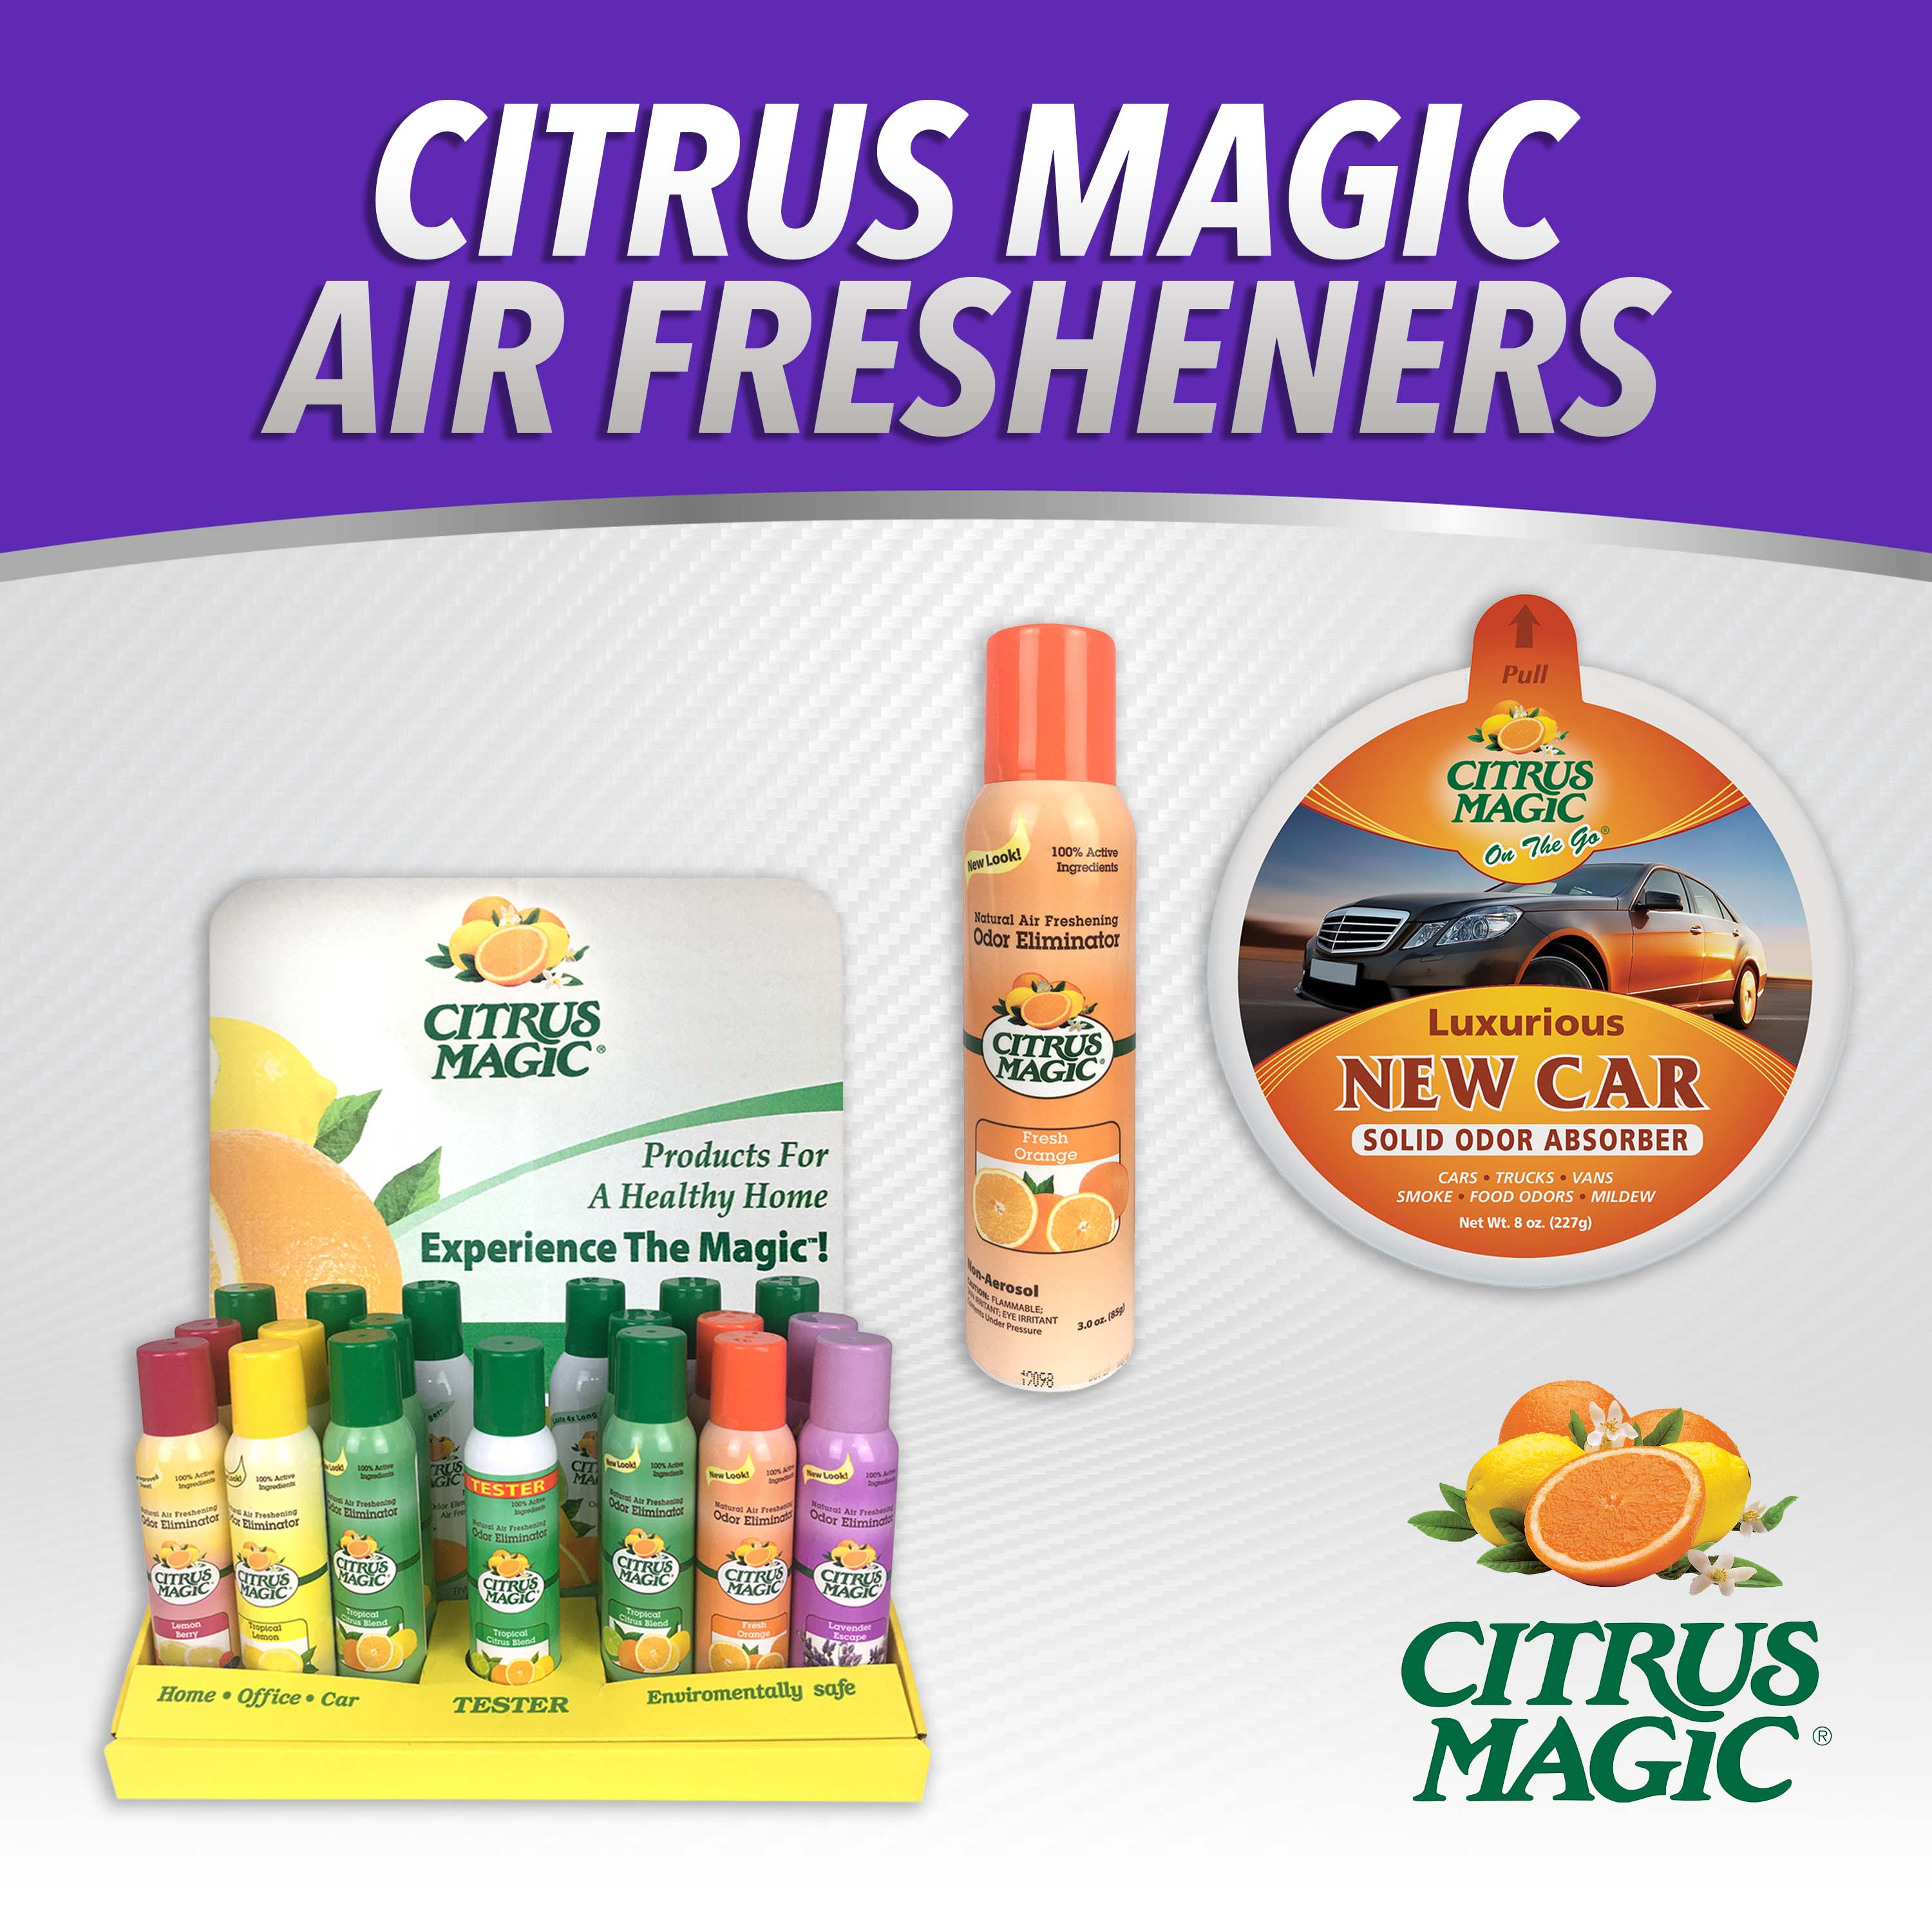 Citrus Magic Air Fresheners